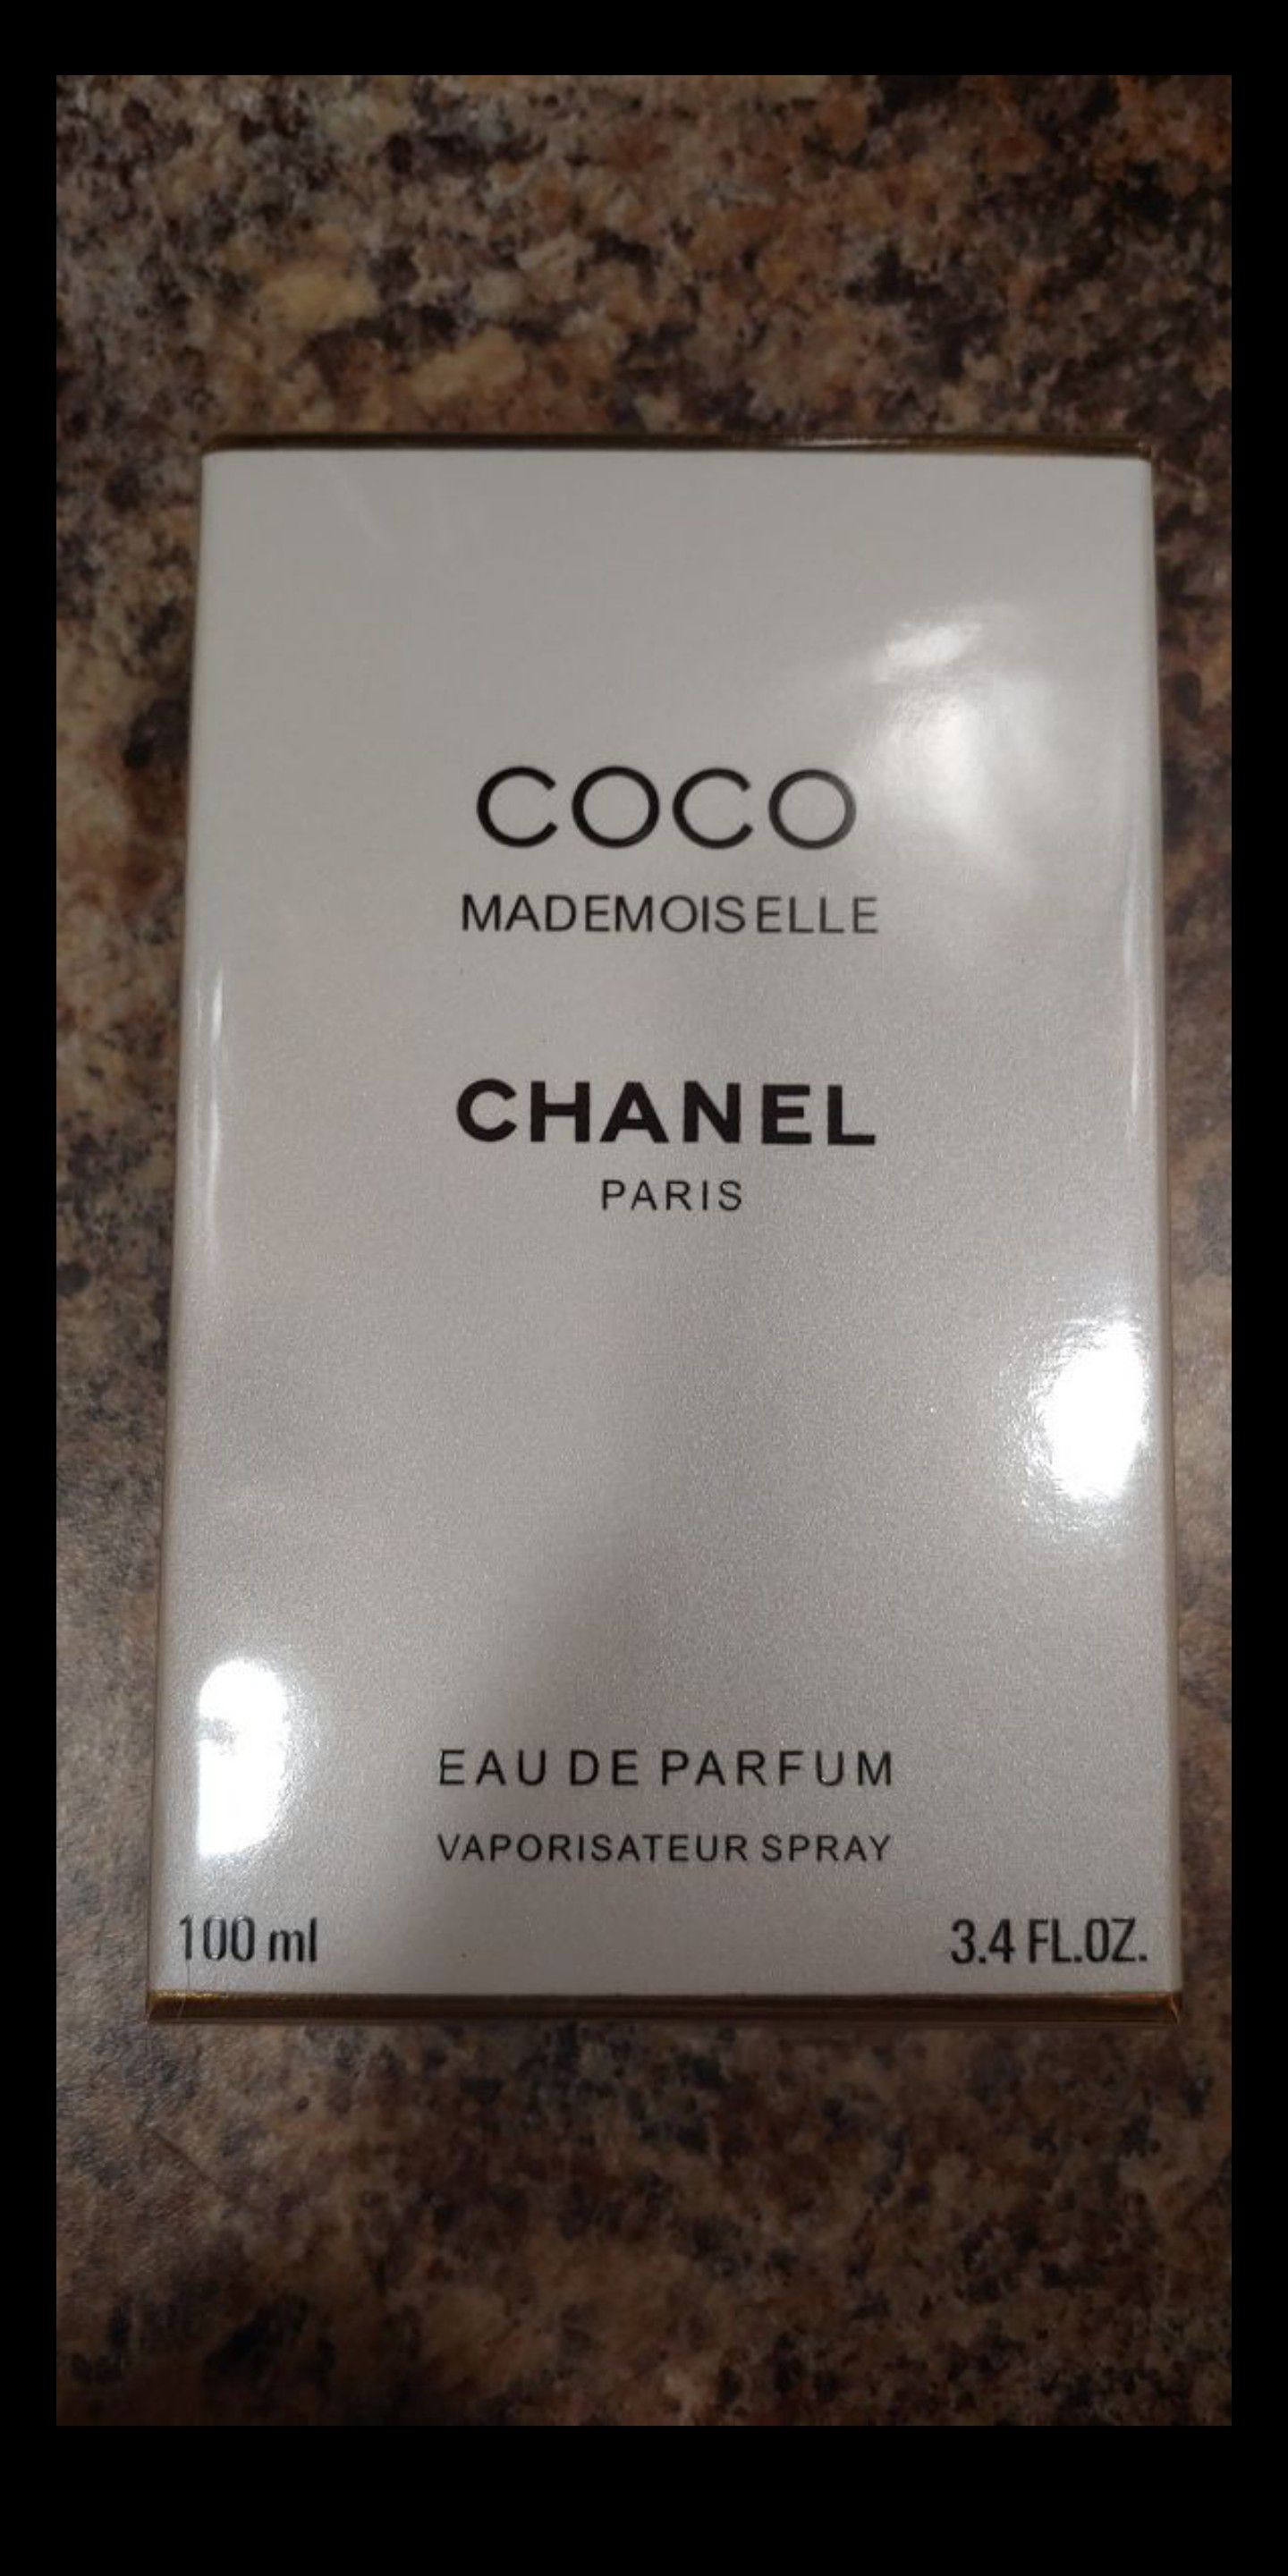 Chanel Coco Mademoiselle Women's Perfume - 3.4 FL OZ